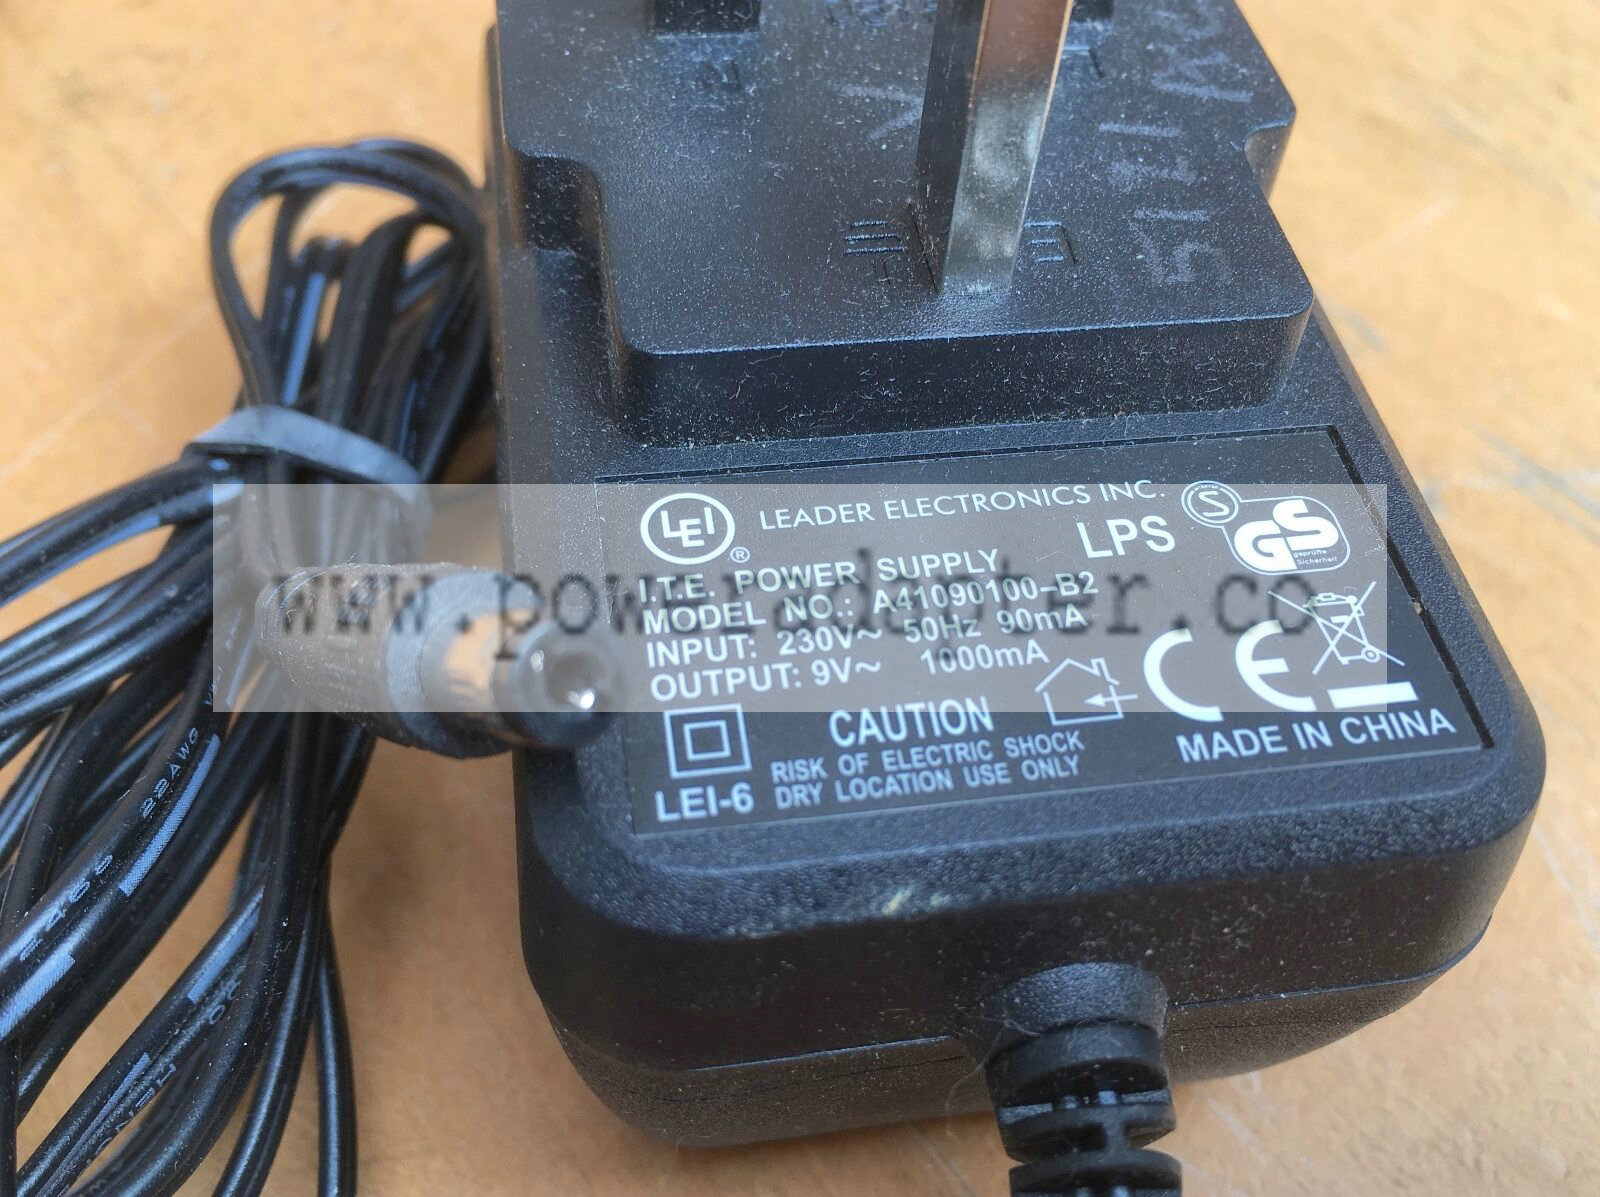 LEI A41090100-B2 9V AC 1A AC/AC Adaptor PSU Power Supply mains adaptor LEI A41090100-B2 AC 9V 1A AC/AC Adaptor - 5mm - Click Image to Close